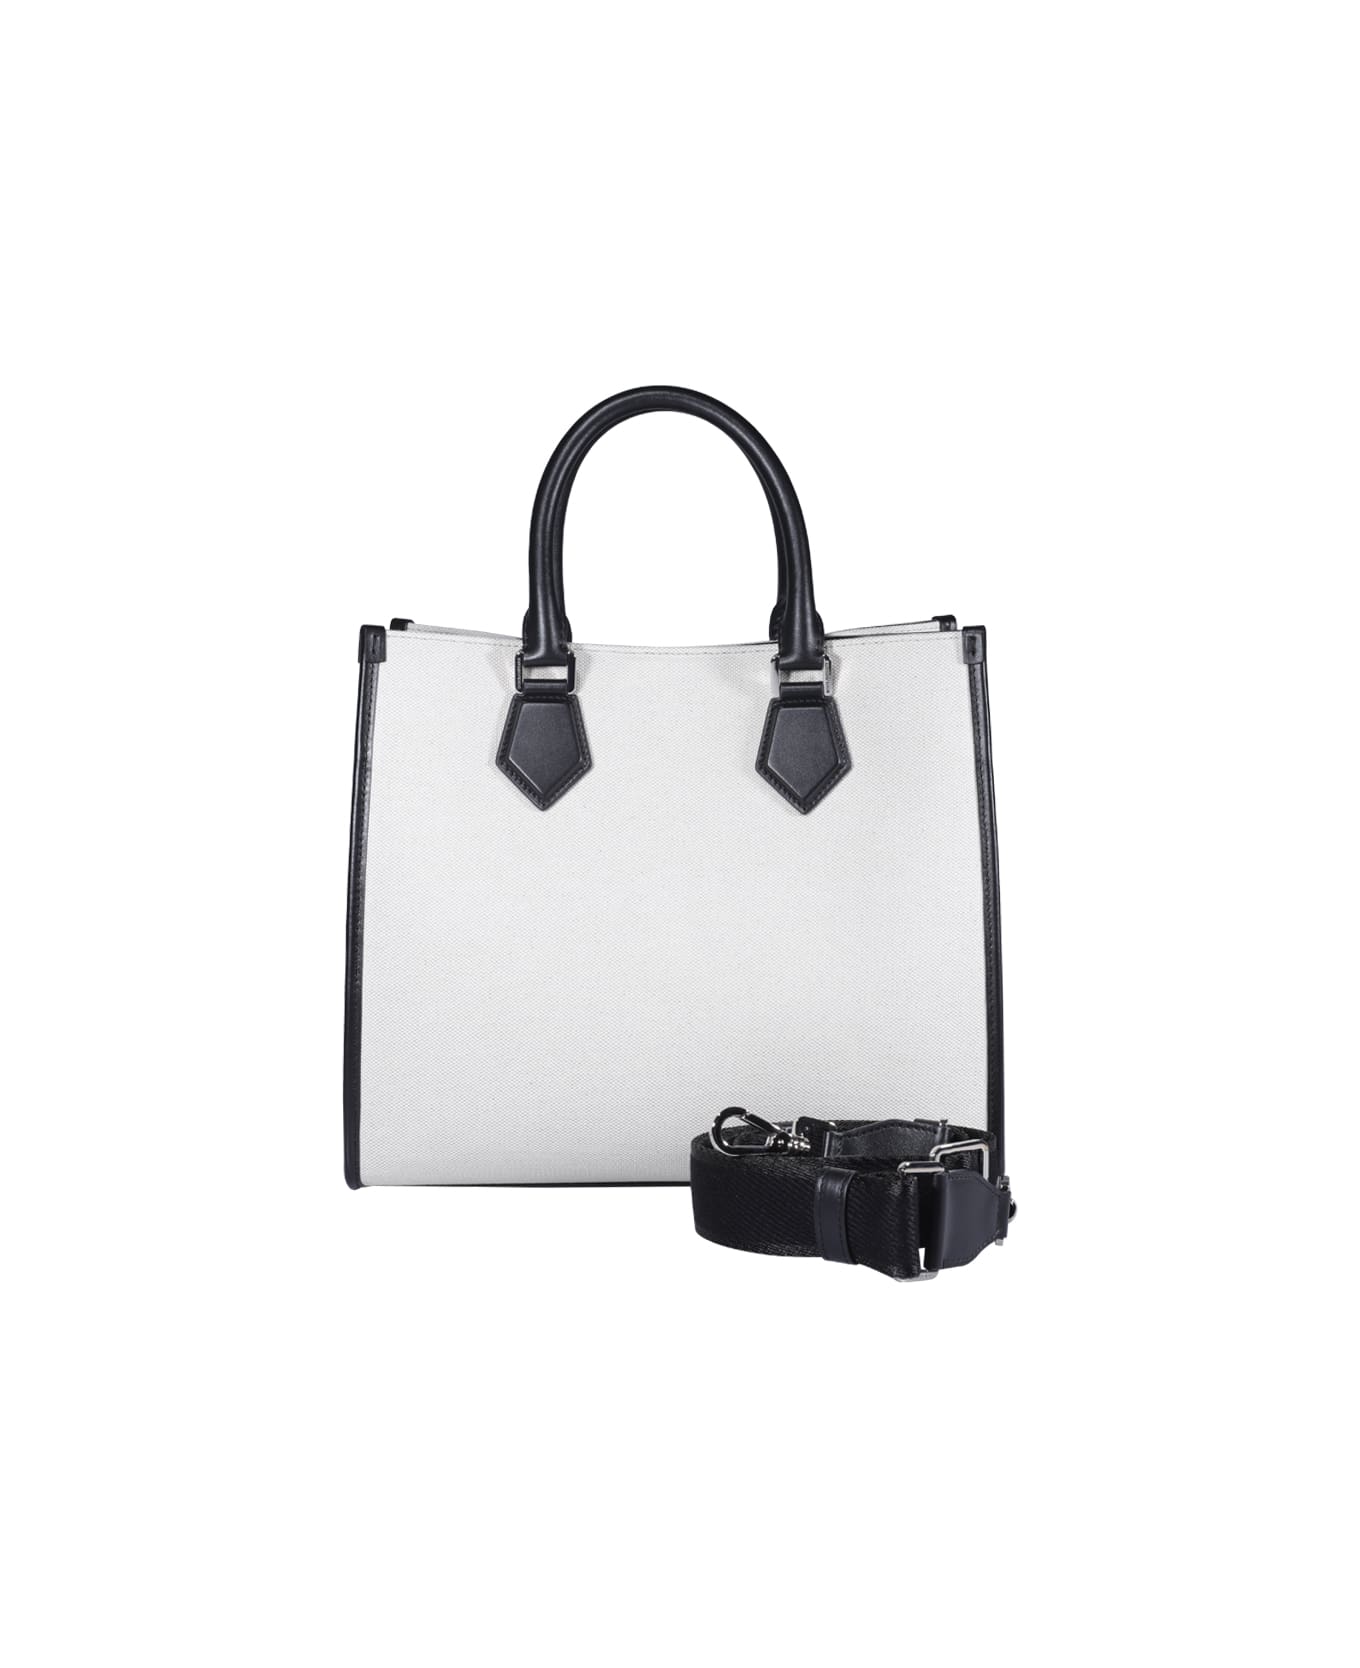 Dolce & Gabbana Sale E Pepe Shopping Bag - Avorio/nero